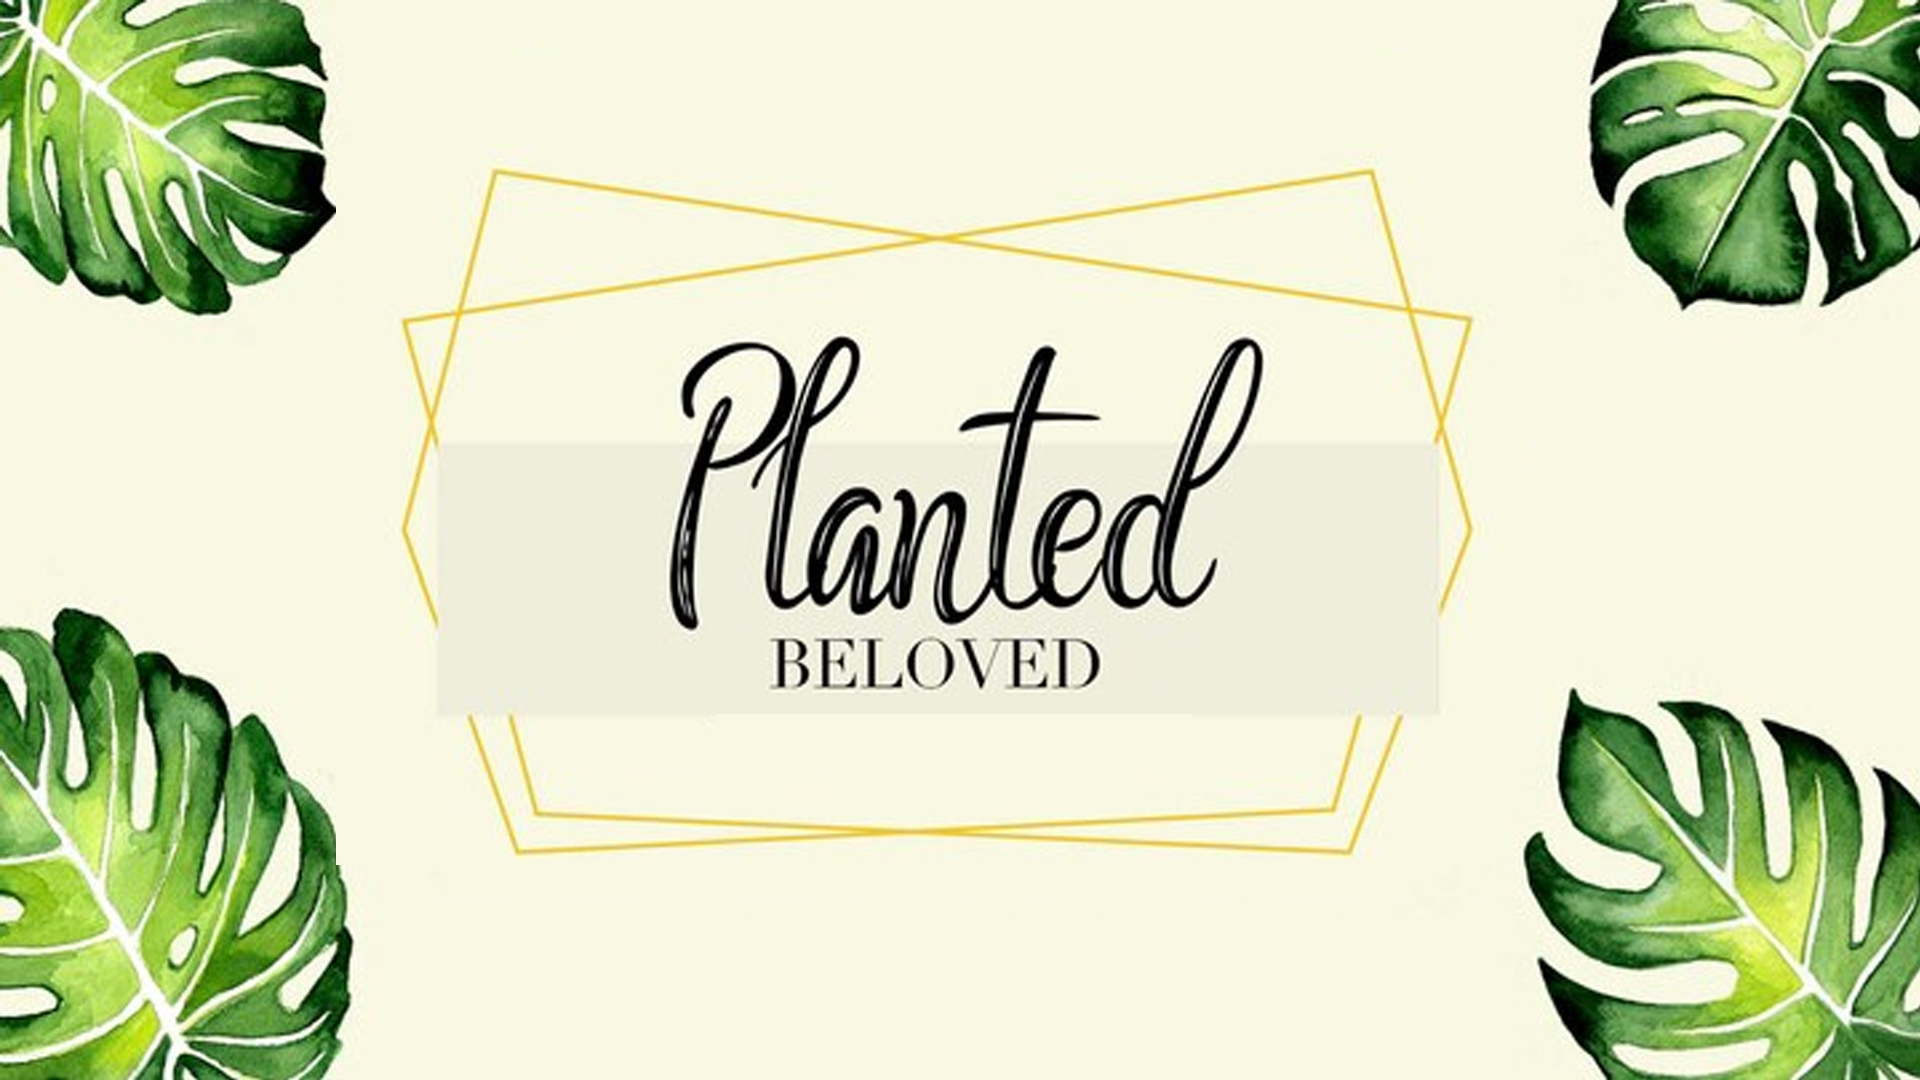 Planted Beloved women